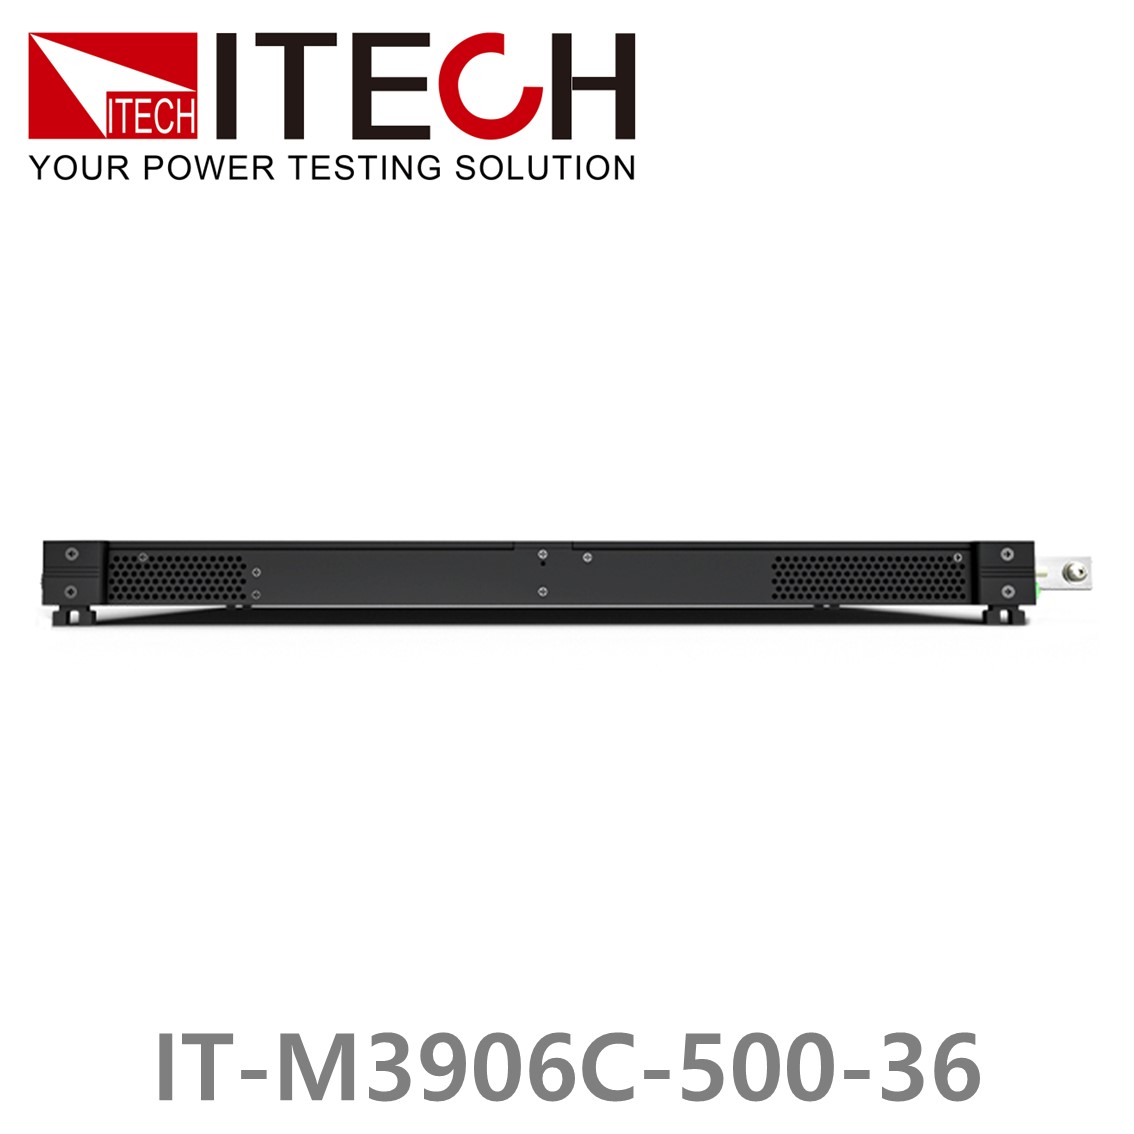 [ ITECH ] IT-M3906B-500-36  회생전력시스템,양방향DC파워 500V/±36A, ±6kW